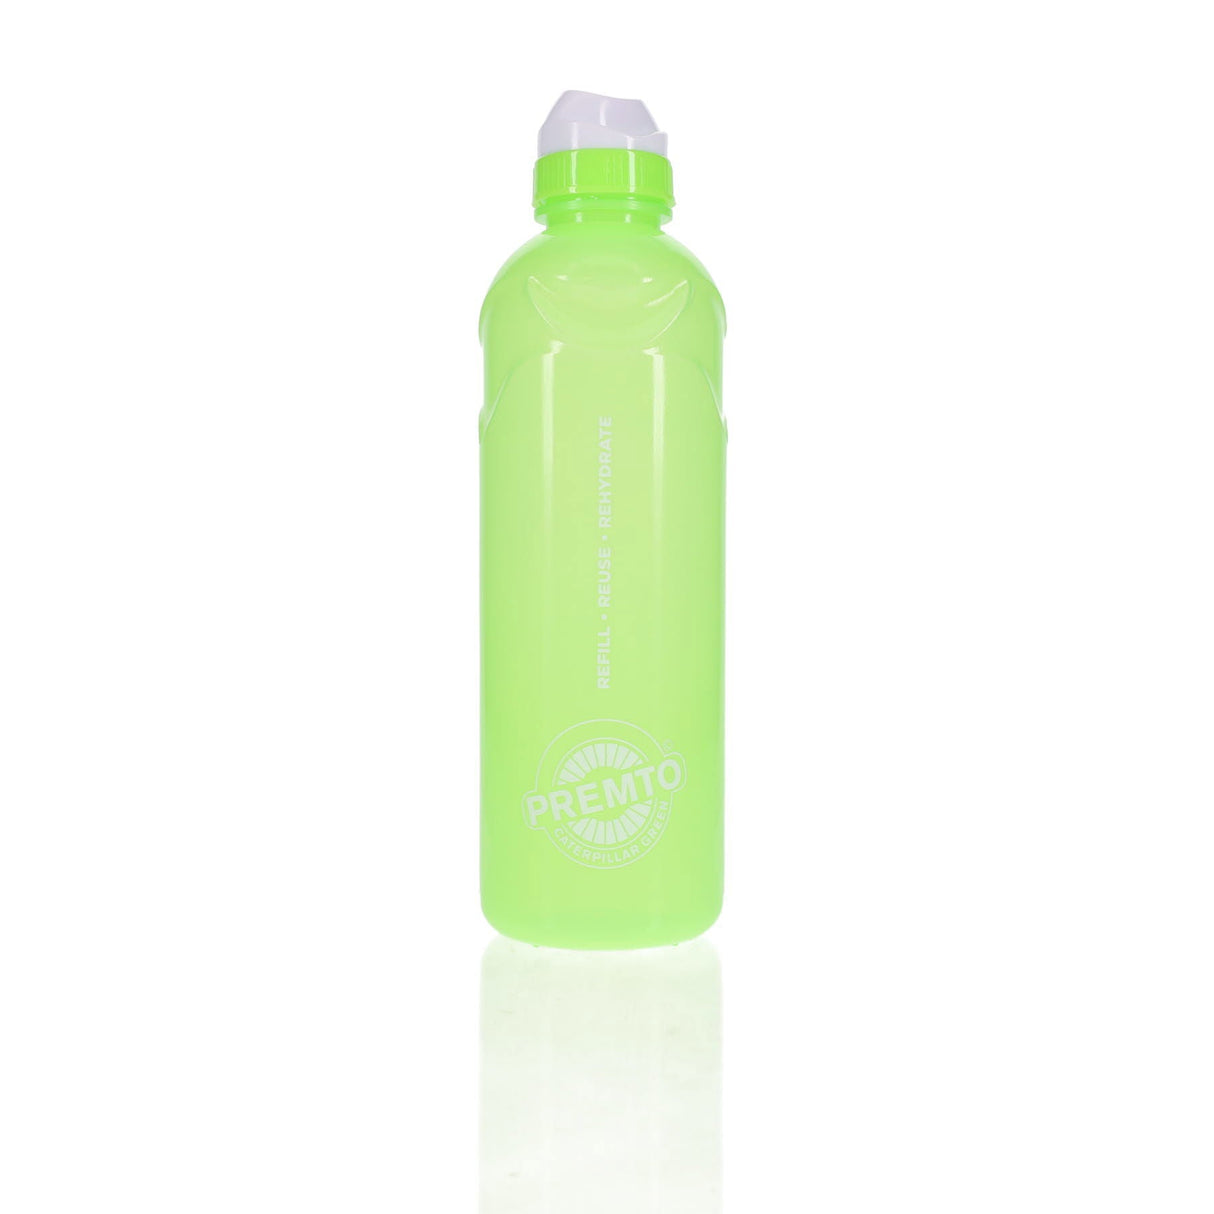 Premto 750ml Stealth Bottle - Caterpillar Green | Stationery Shop UK